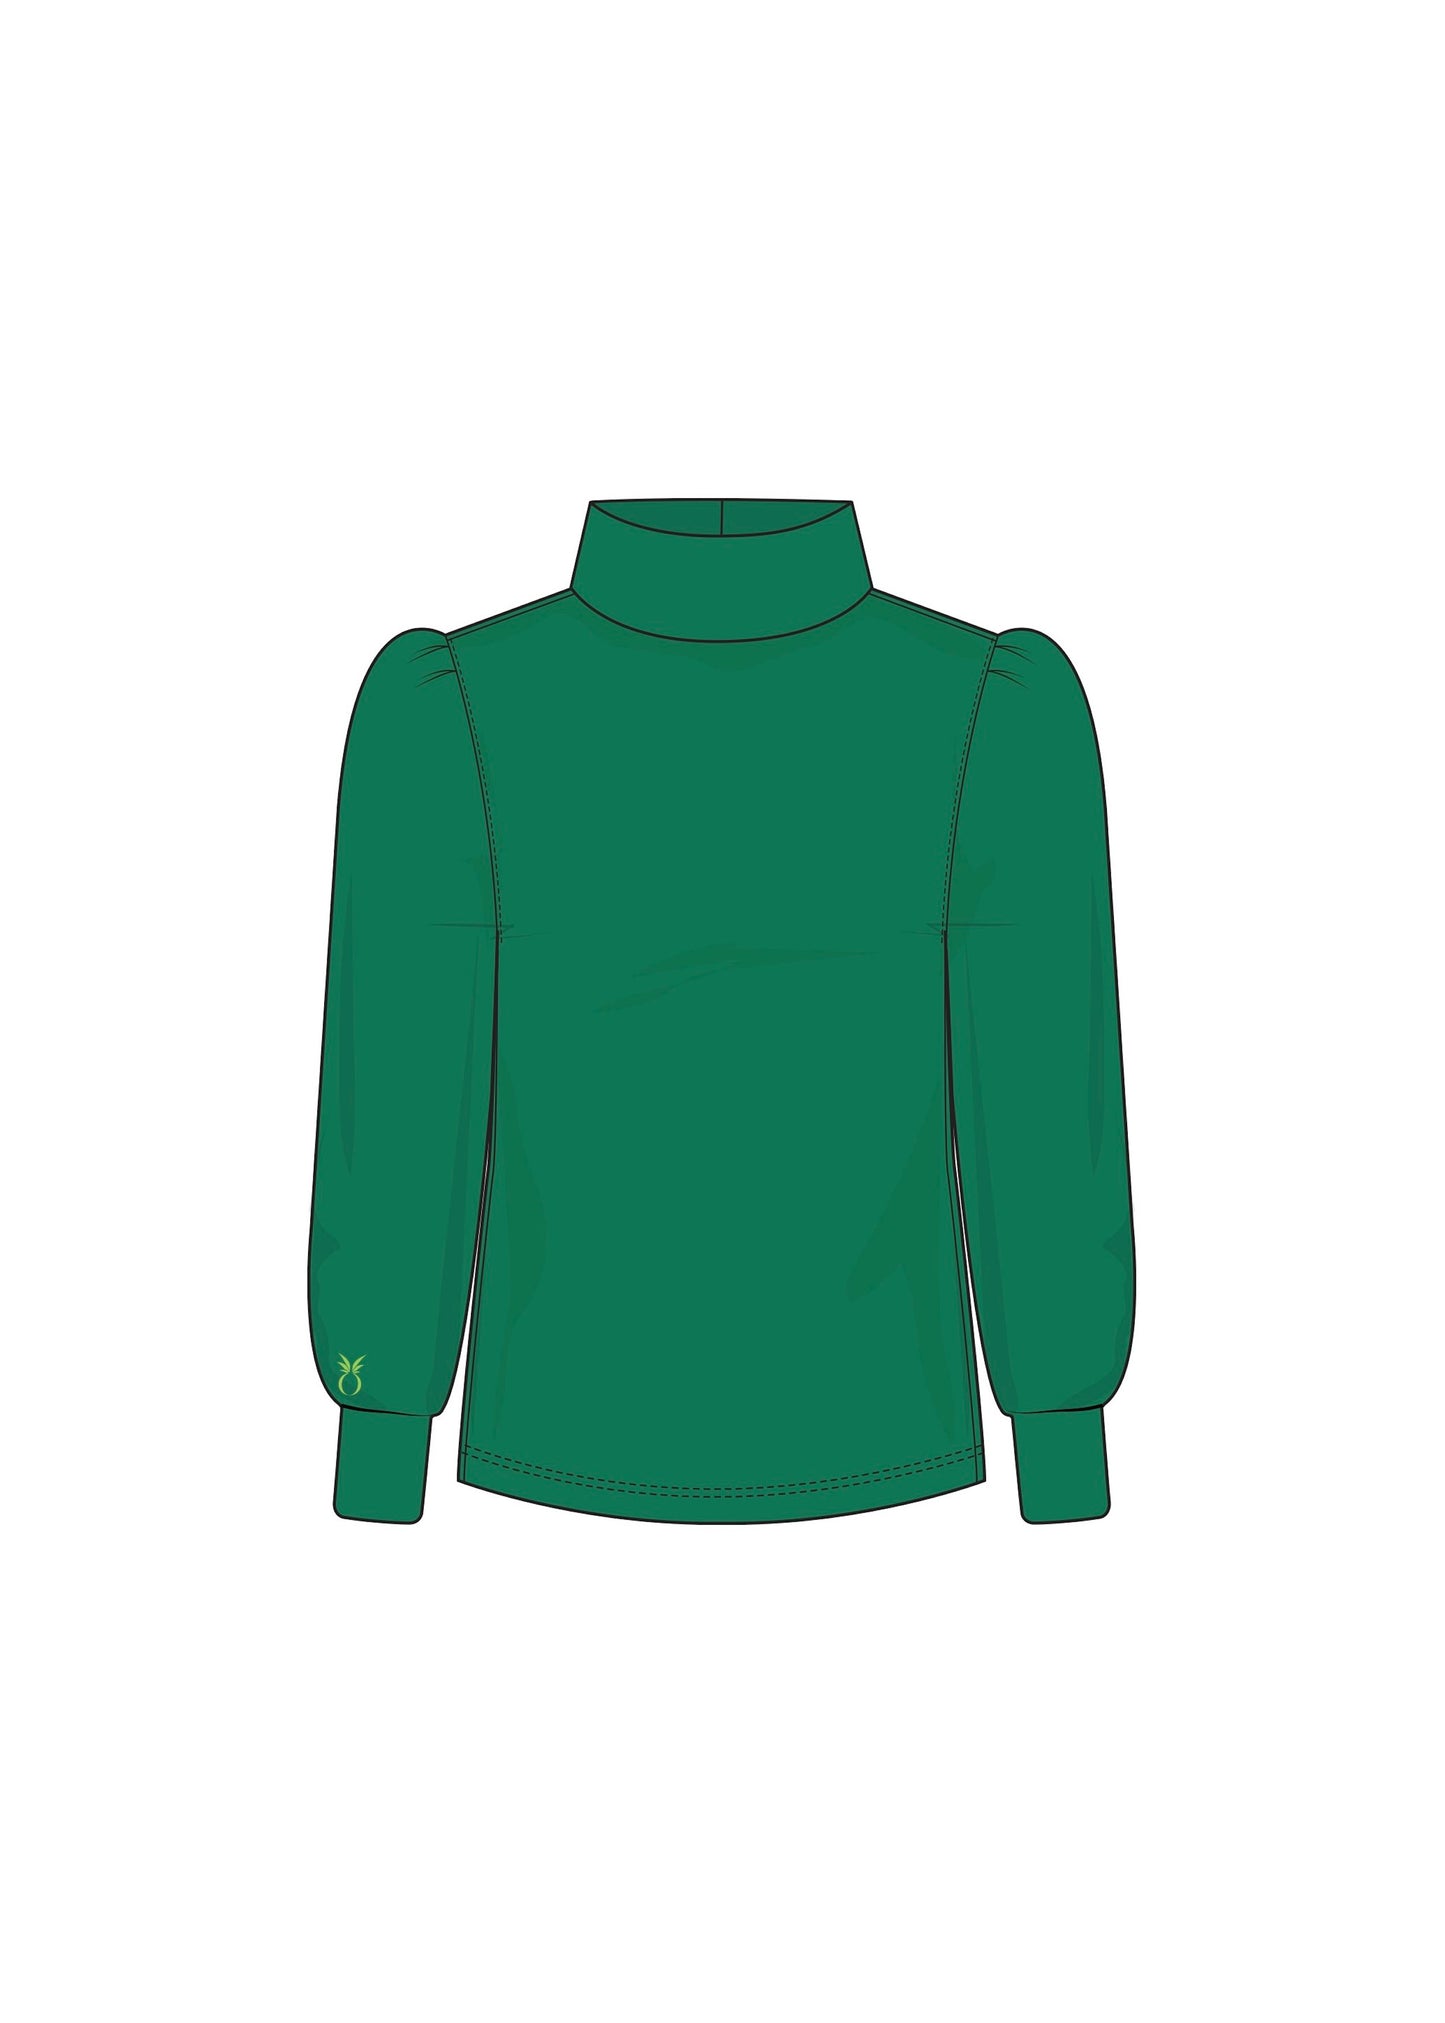 Palace Puff Sleeve Turtleneck in Vello Fleece (Emerald)